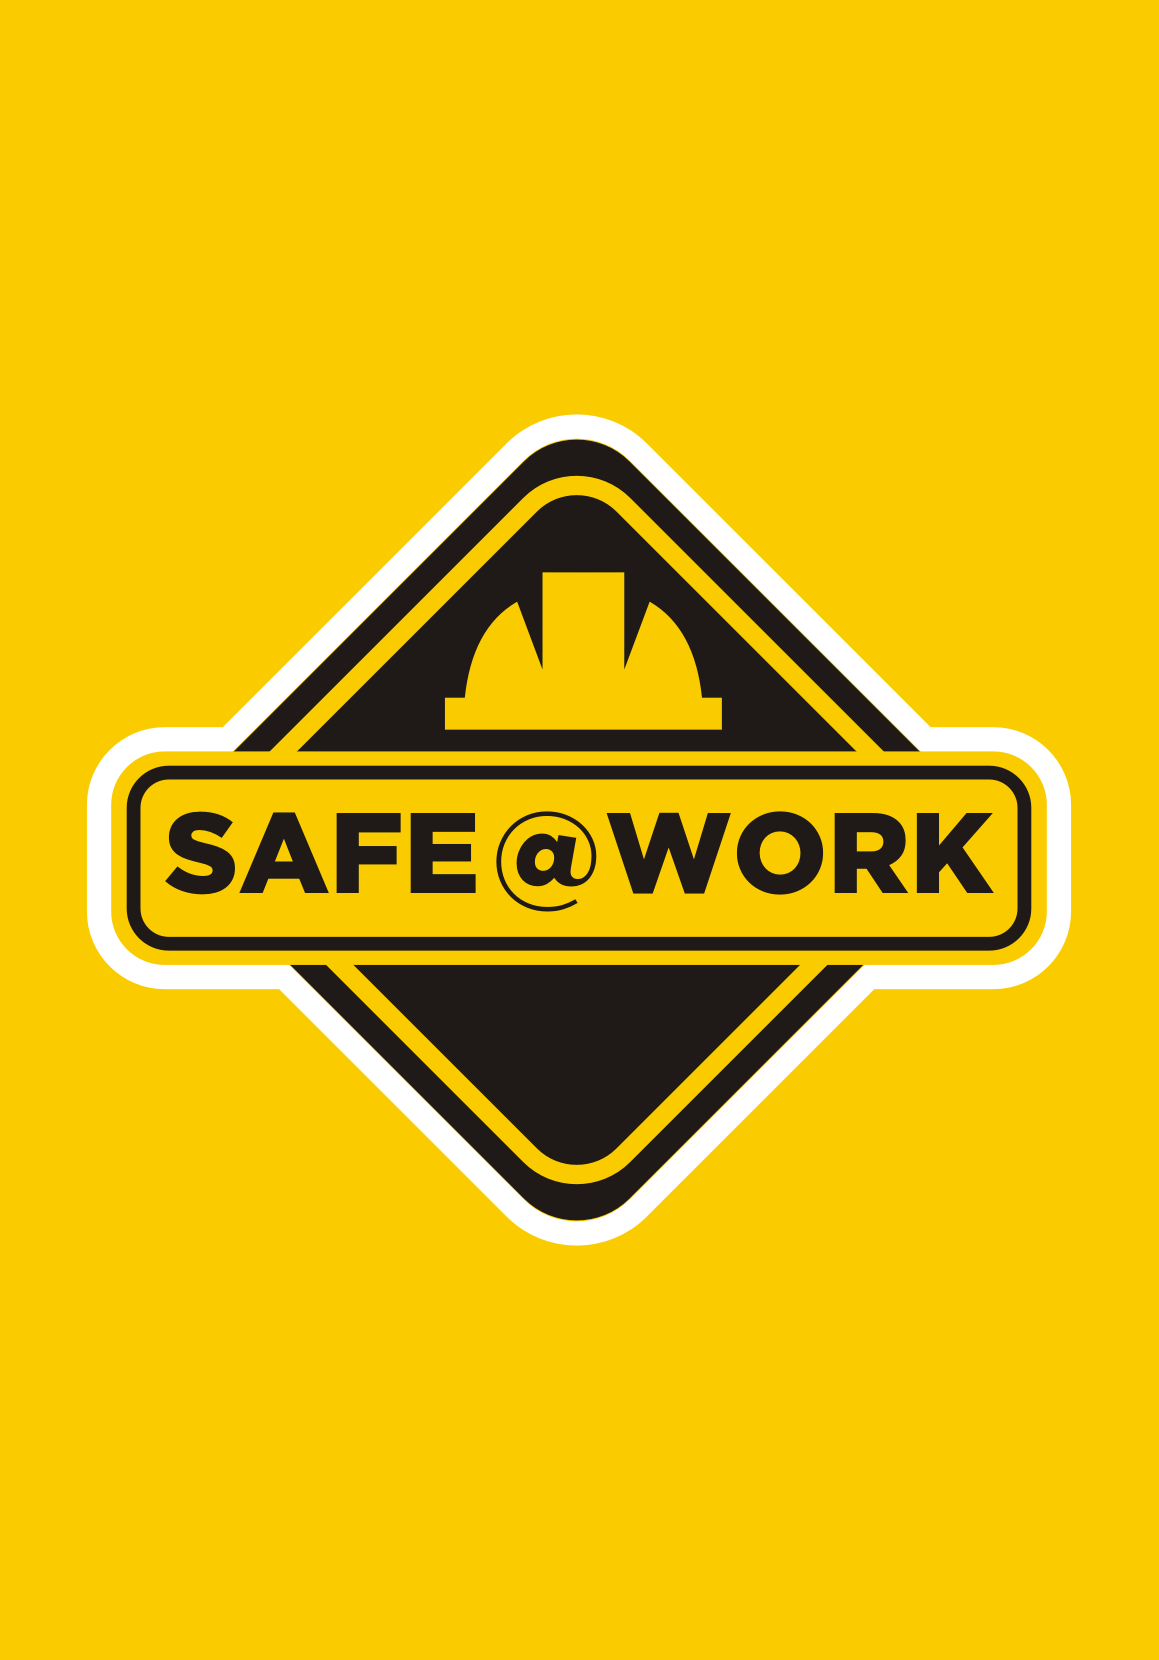 Workplace Heath & Safety